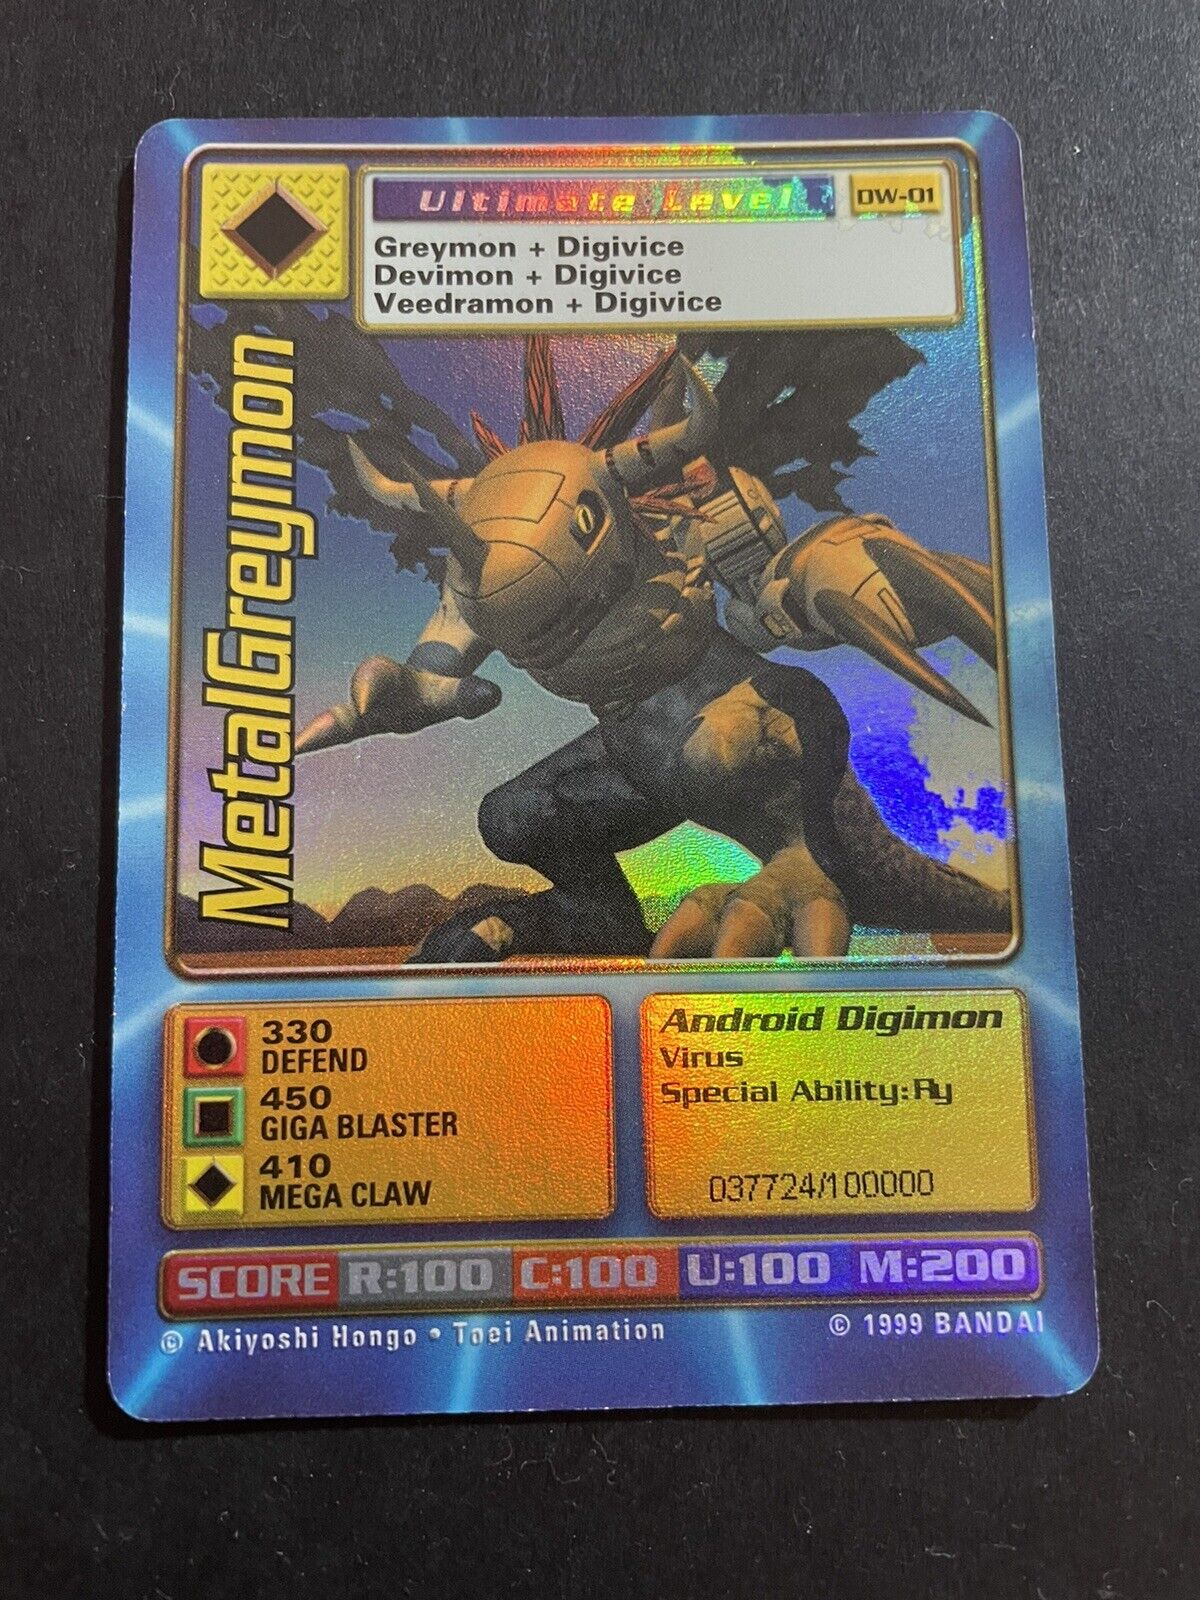 Digimon World PlayStation Promo DW-01 MetalGreymon - number 037724 / 100,000